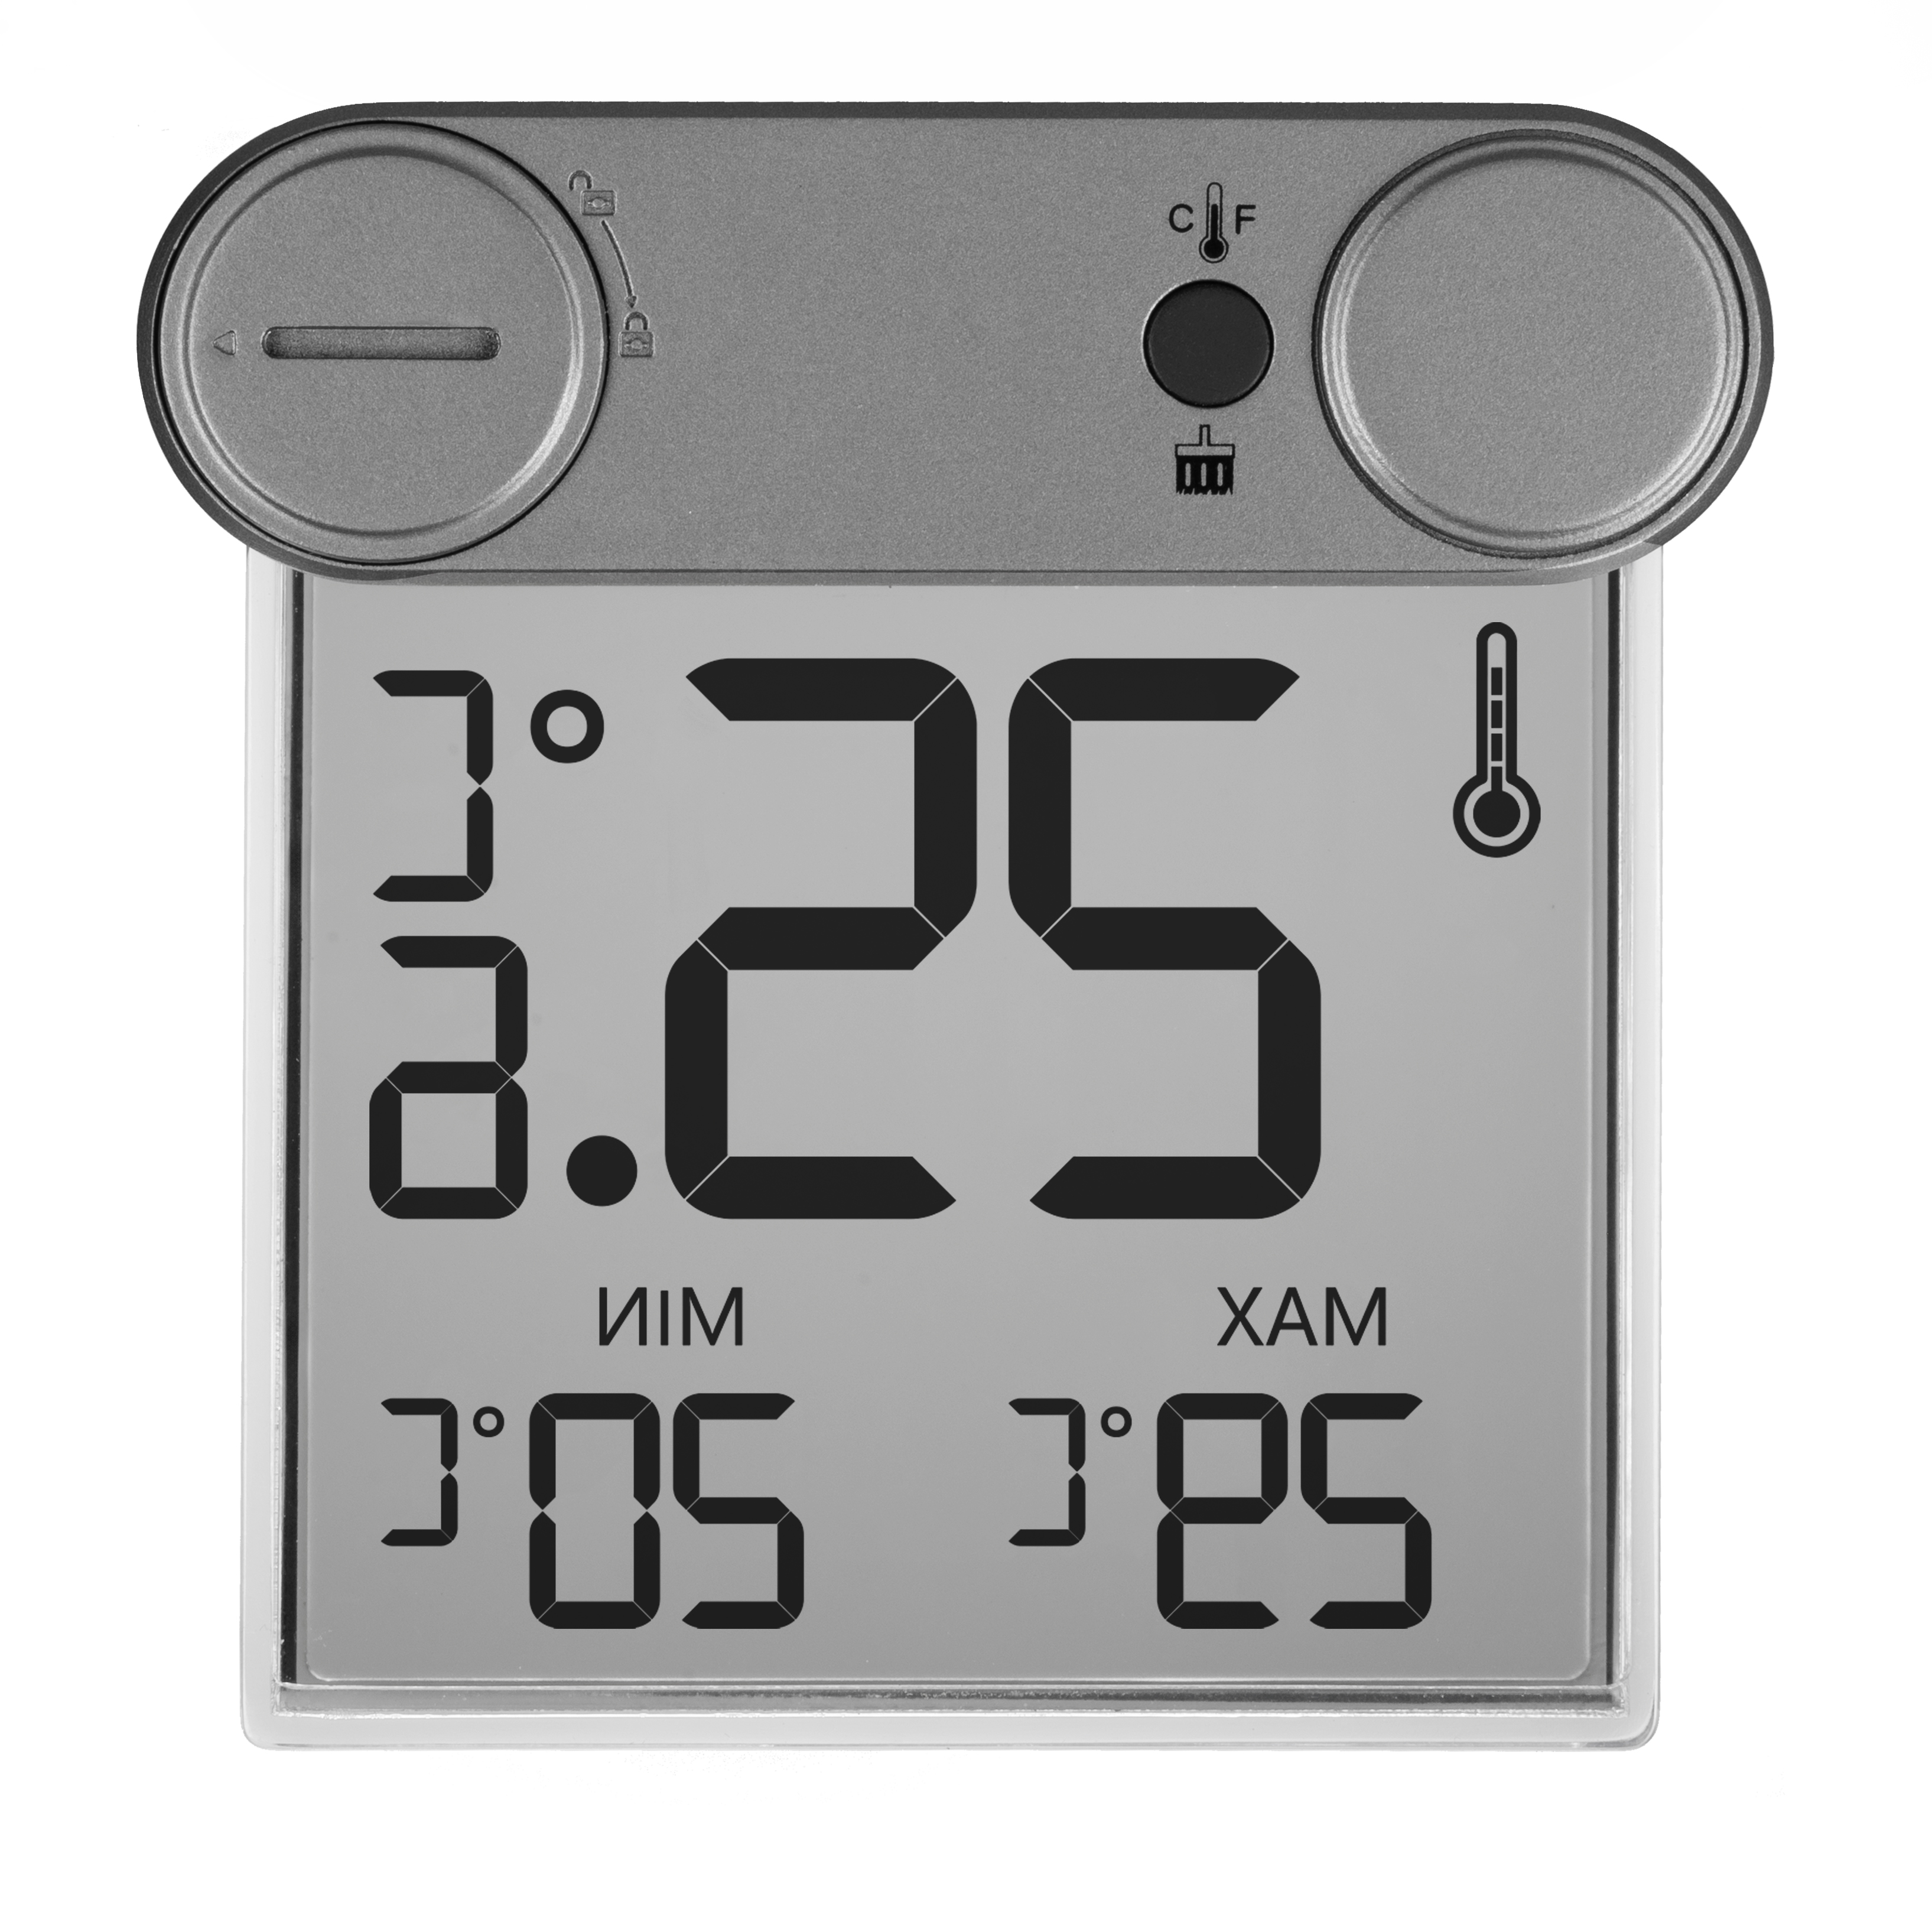 BRESSER Fenster-Thermometer Translucidus WT